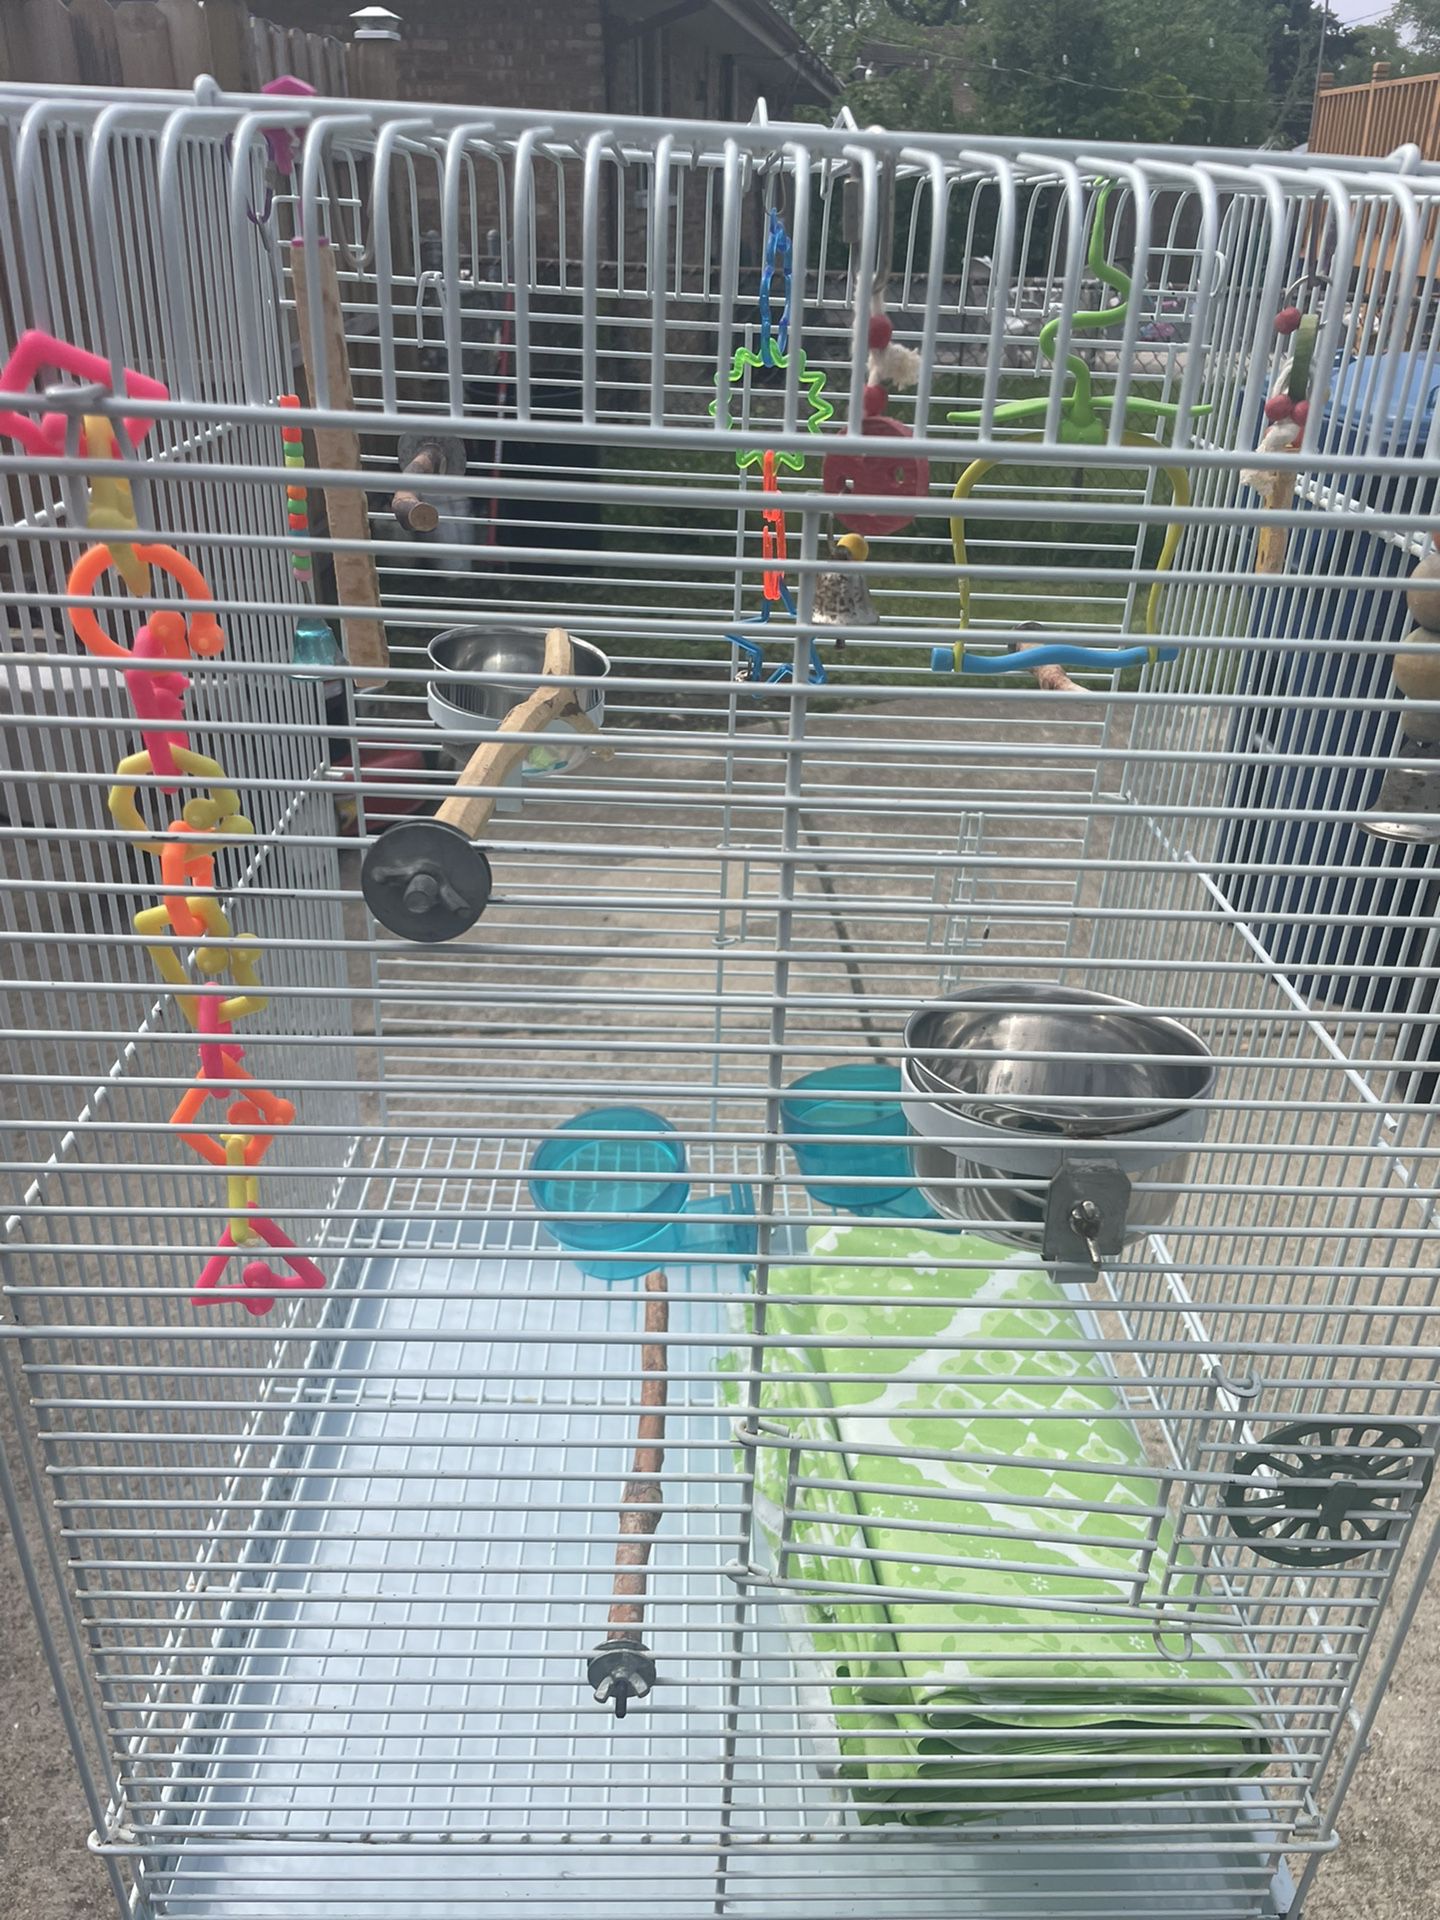 Large bird Cage